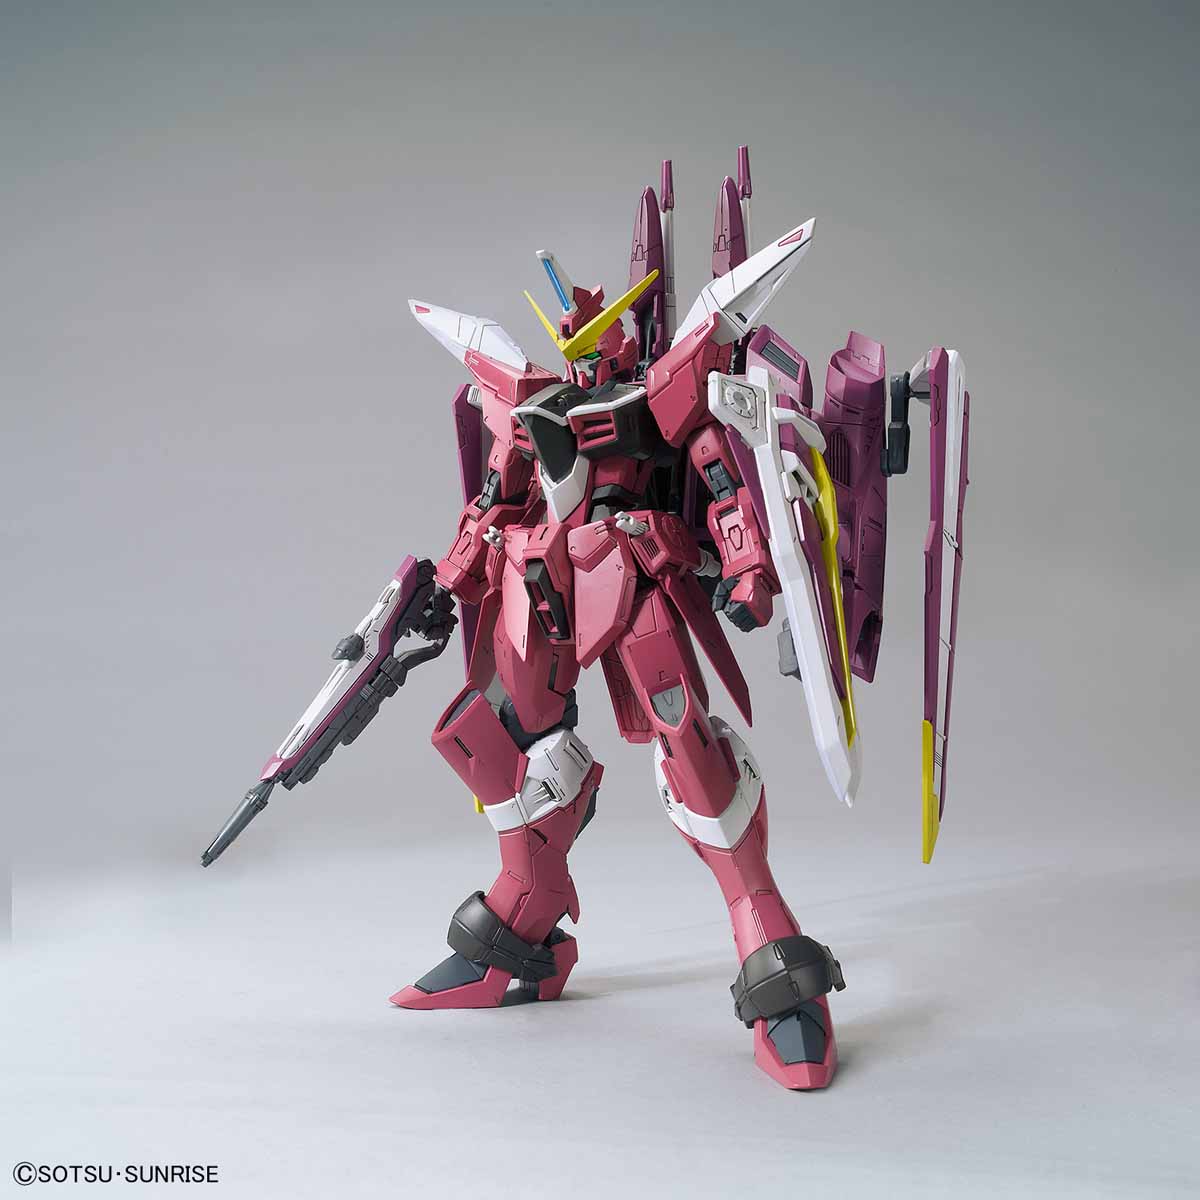 MG 1/100 ZGMF-X09A ジャスティスガンダム [Justice Gundam] 0216382 4549660163824 5063150 4573102631503